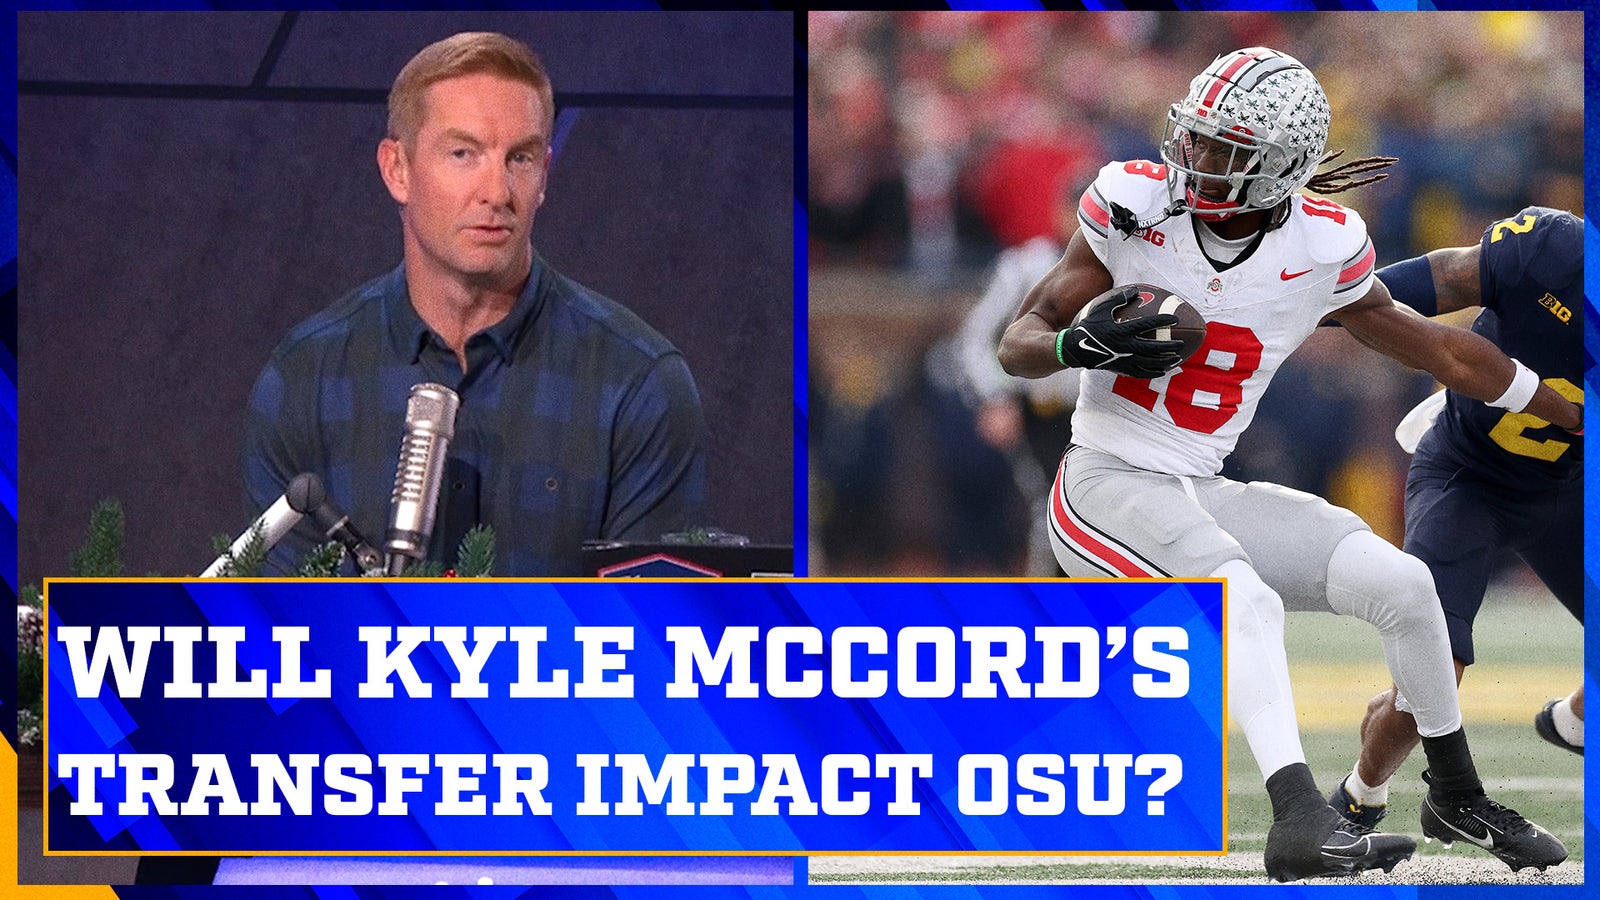 Joel Klatt explains how Kyle McCord's transfer could impact Ohio State